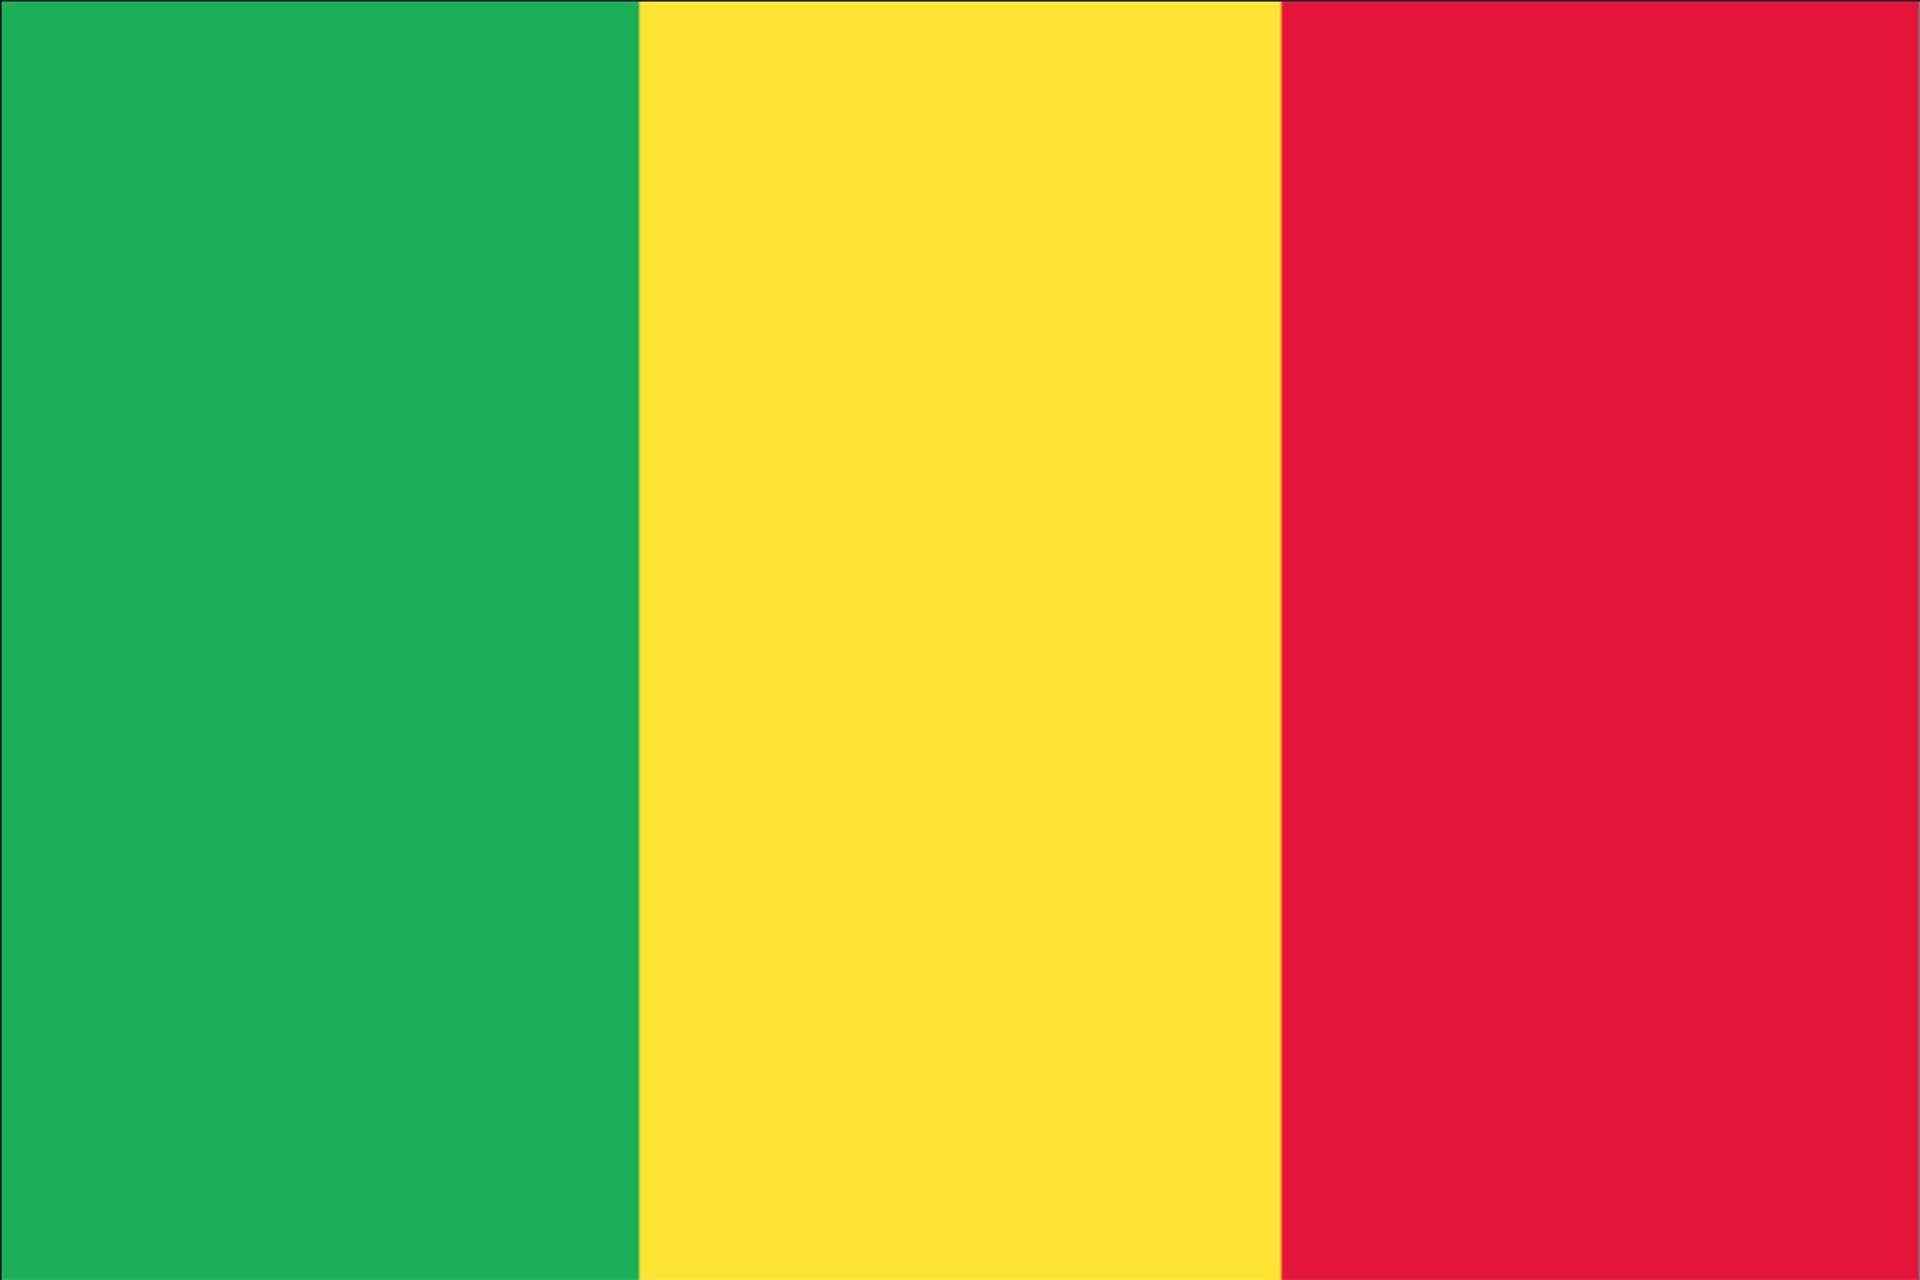 80 Mali Flagge g/m² flaggenmeer